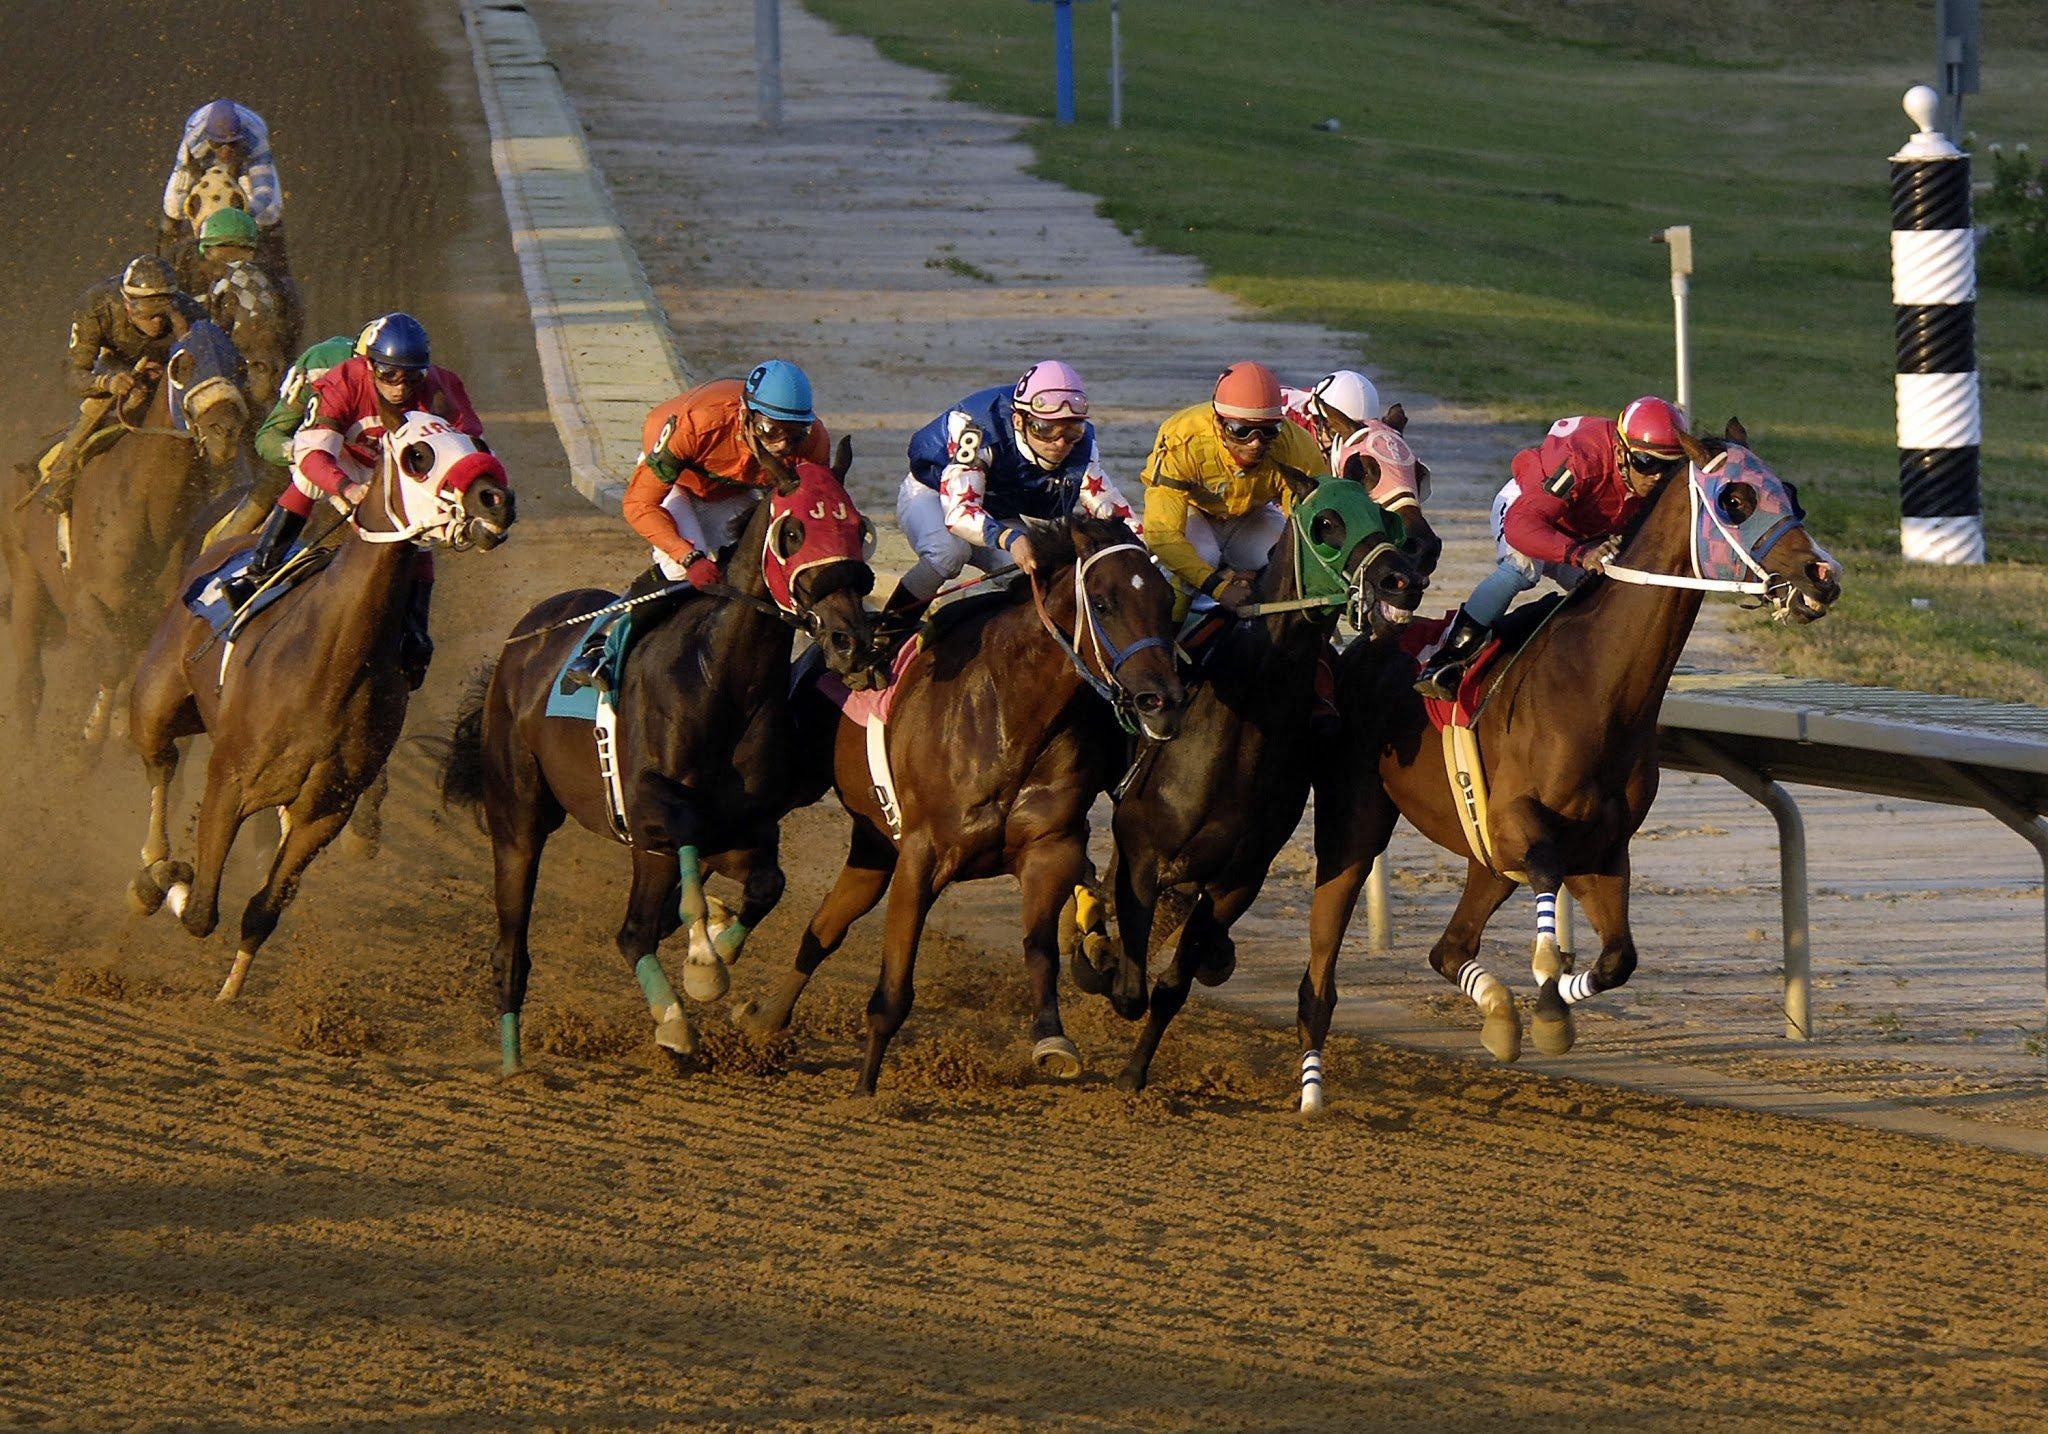 Equestrian Sports: Flat racing, The most popular horse riding discipline and a gambling activity. 2050x1440 HD Wallpaper.